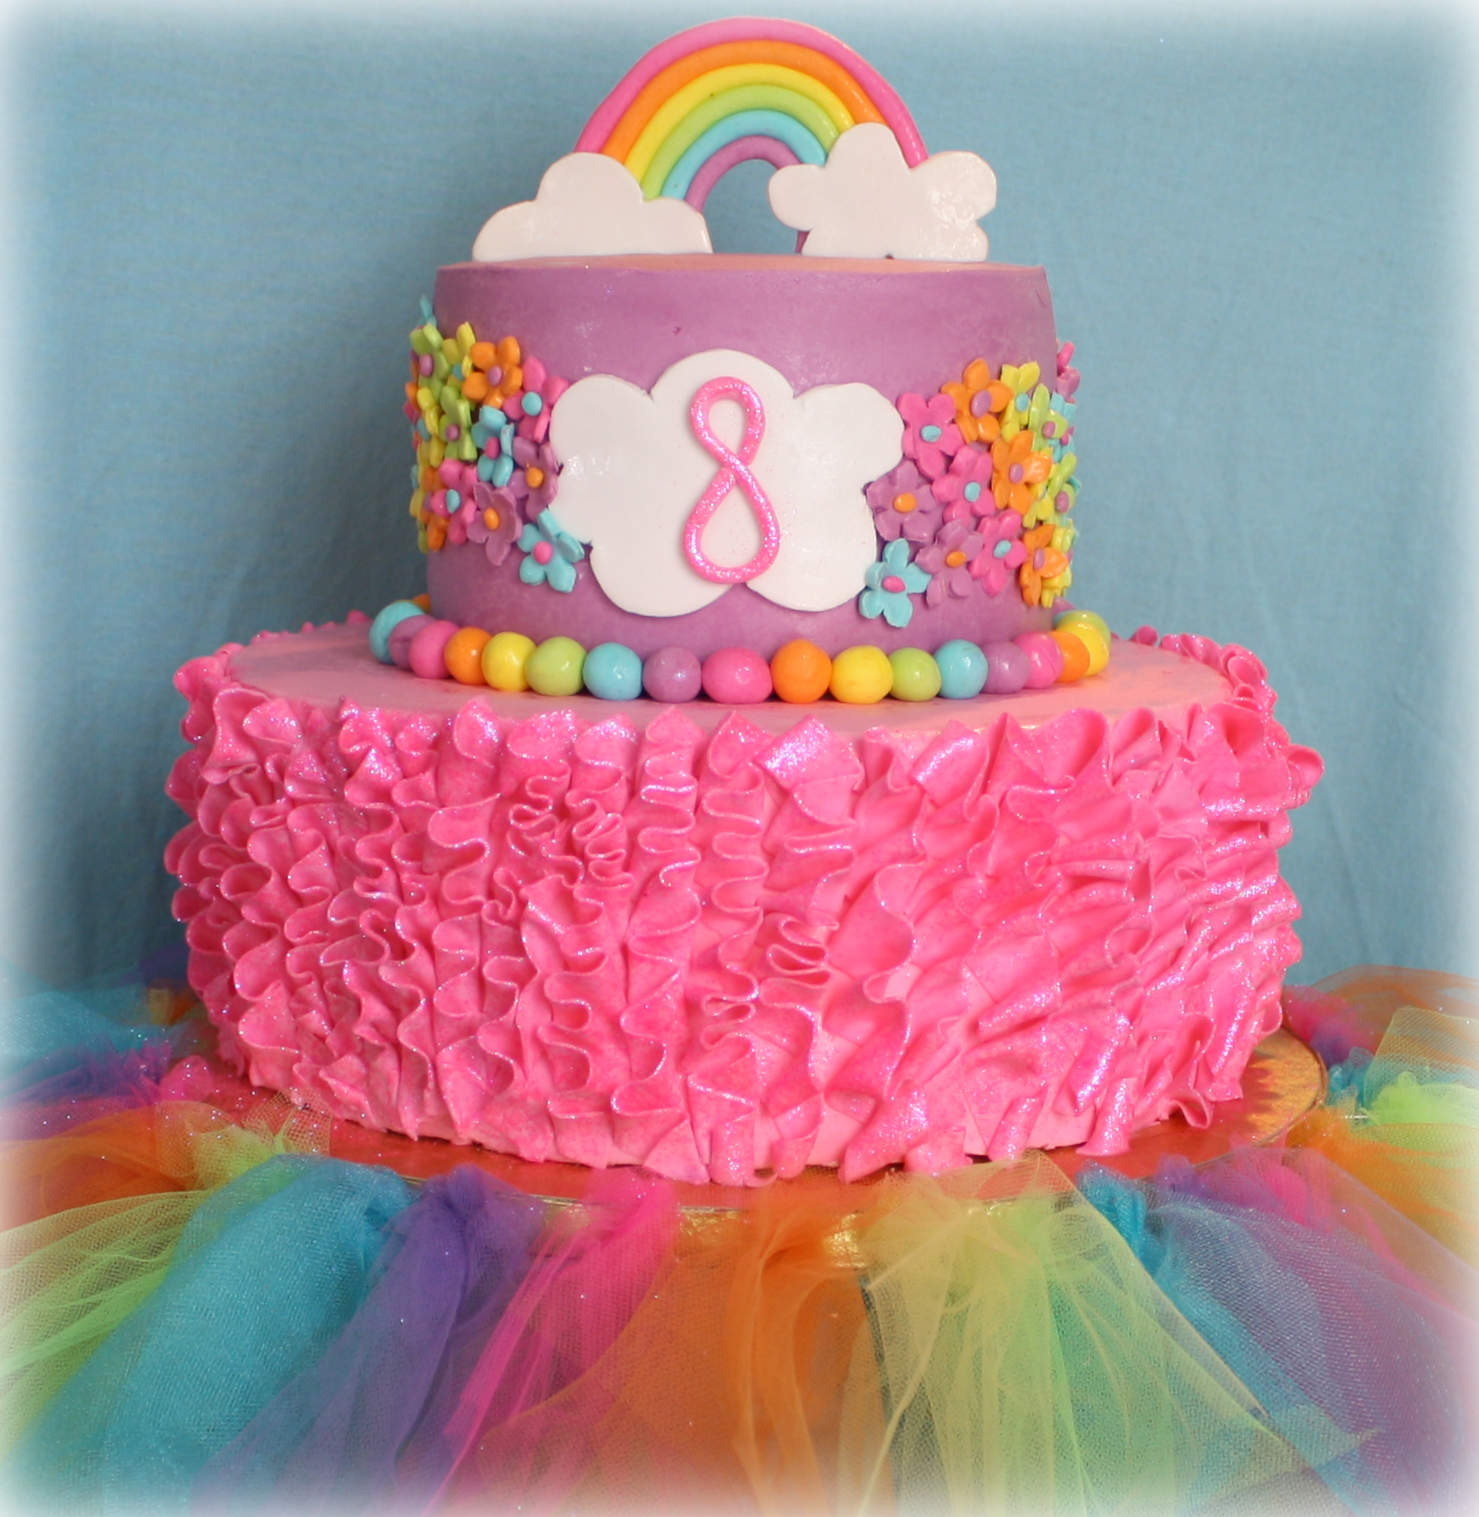 Happy 8th Birthday Cake